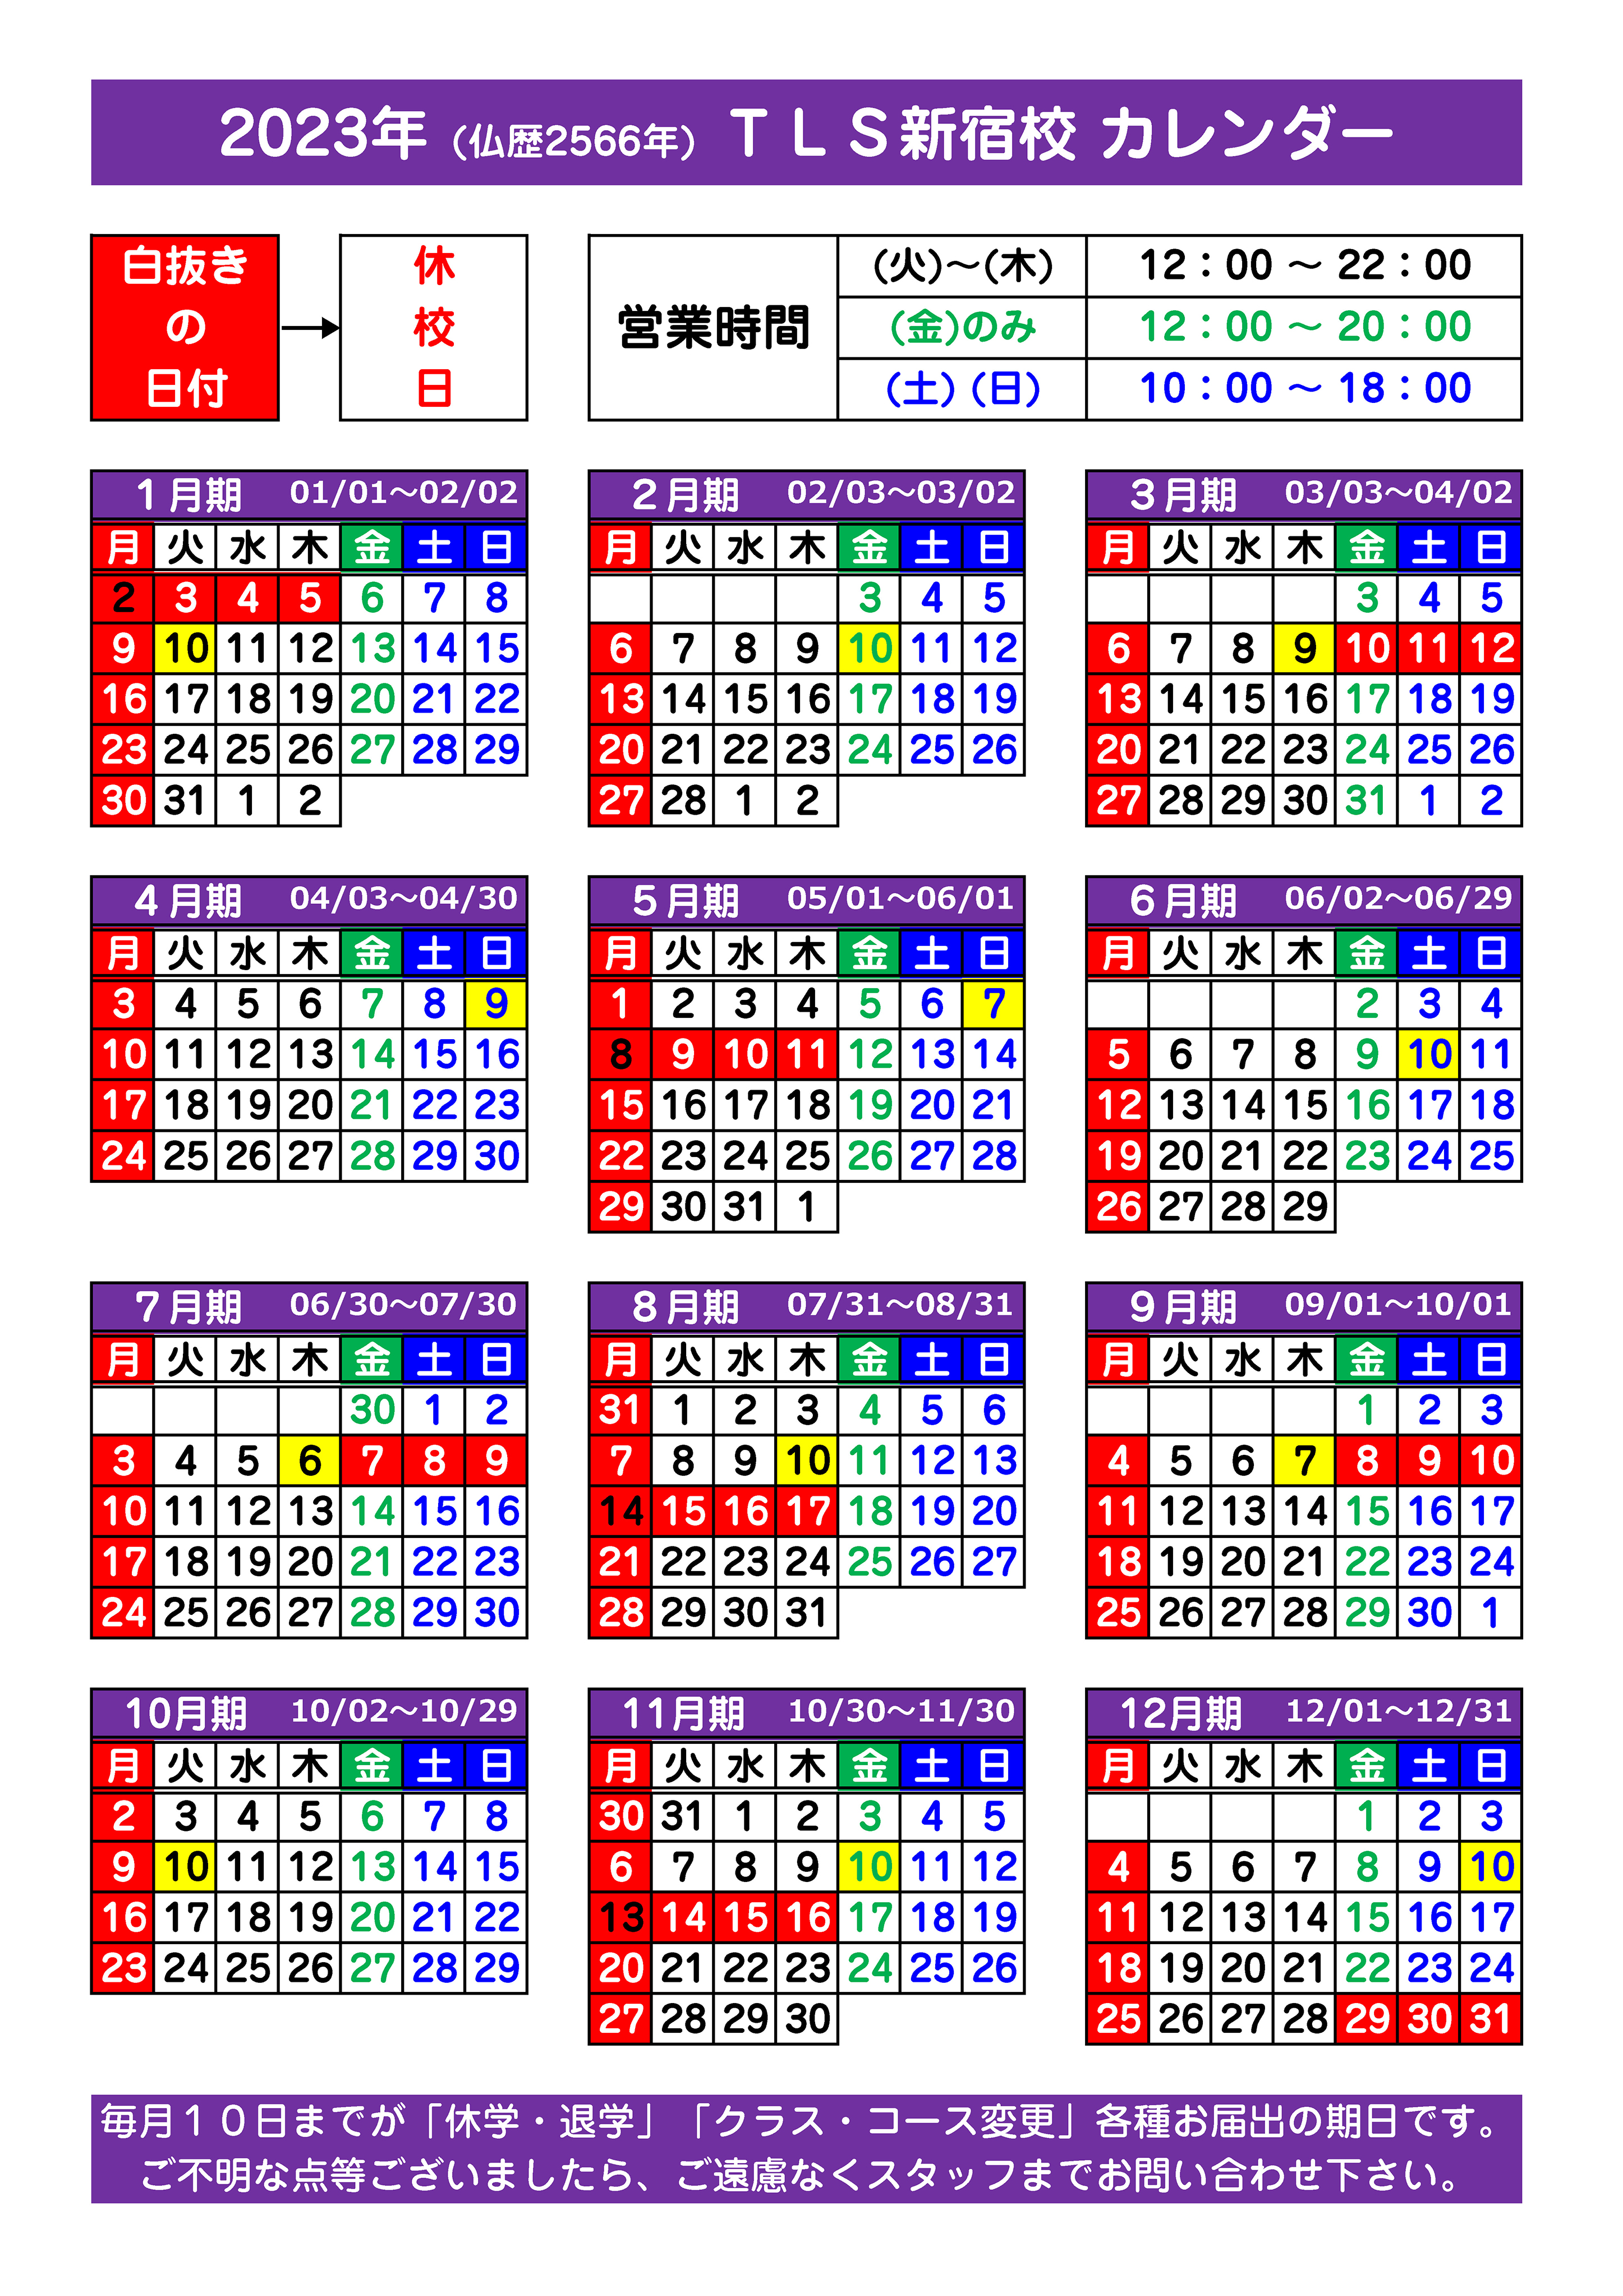 TLS新宿カレンダー